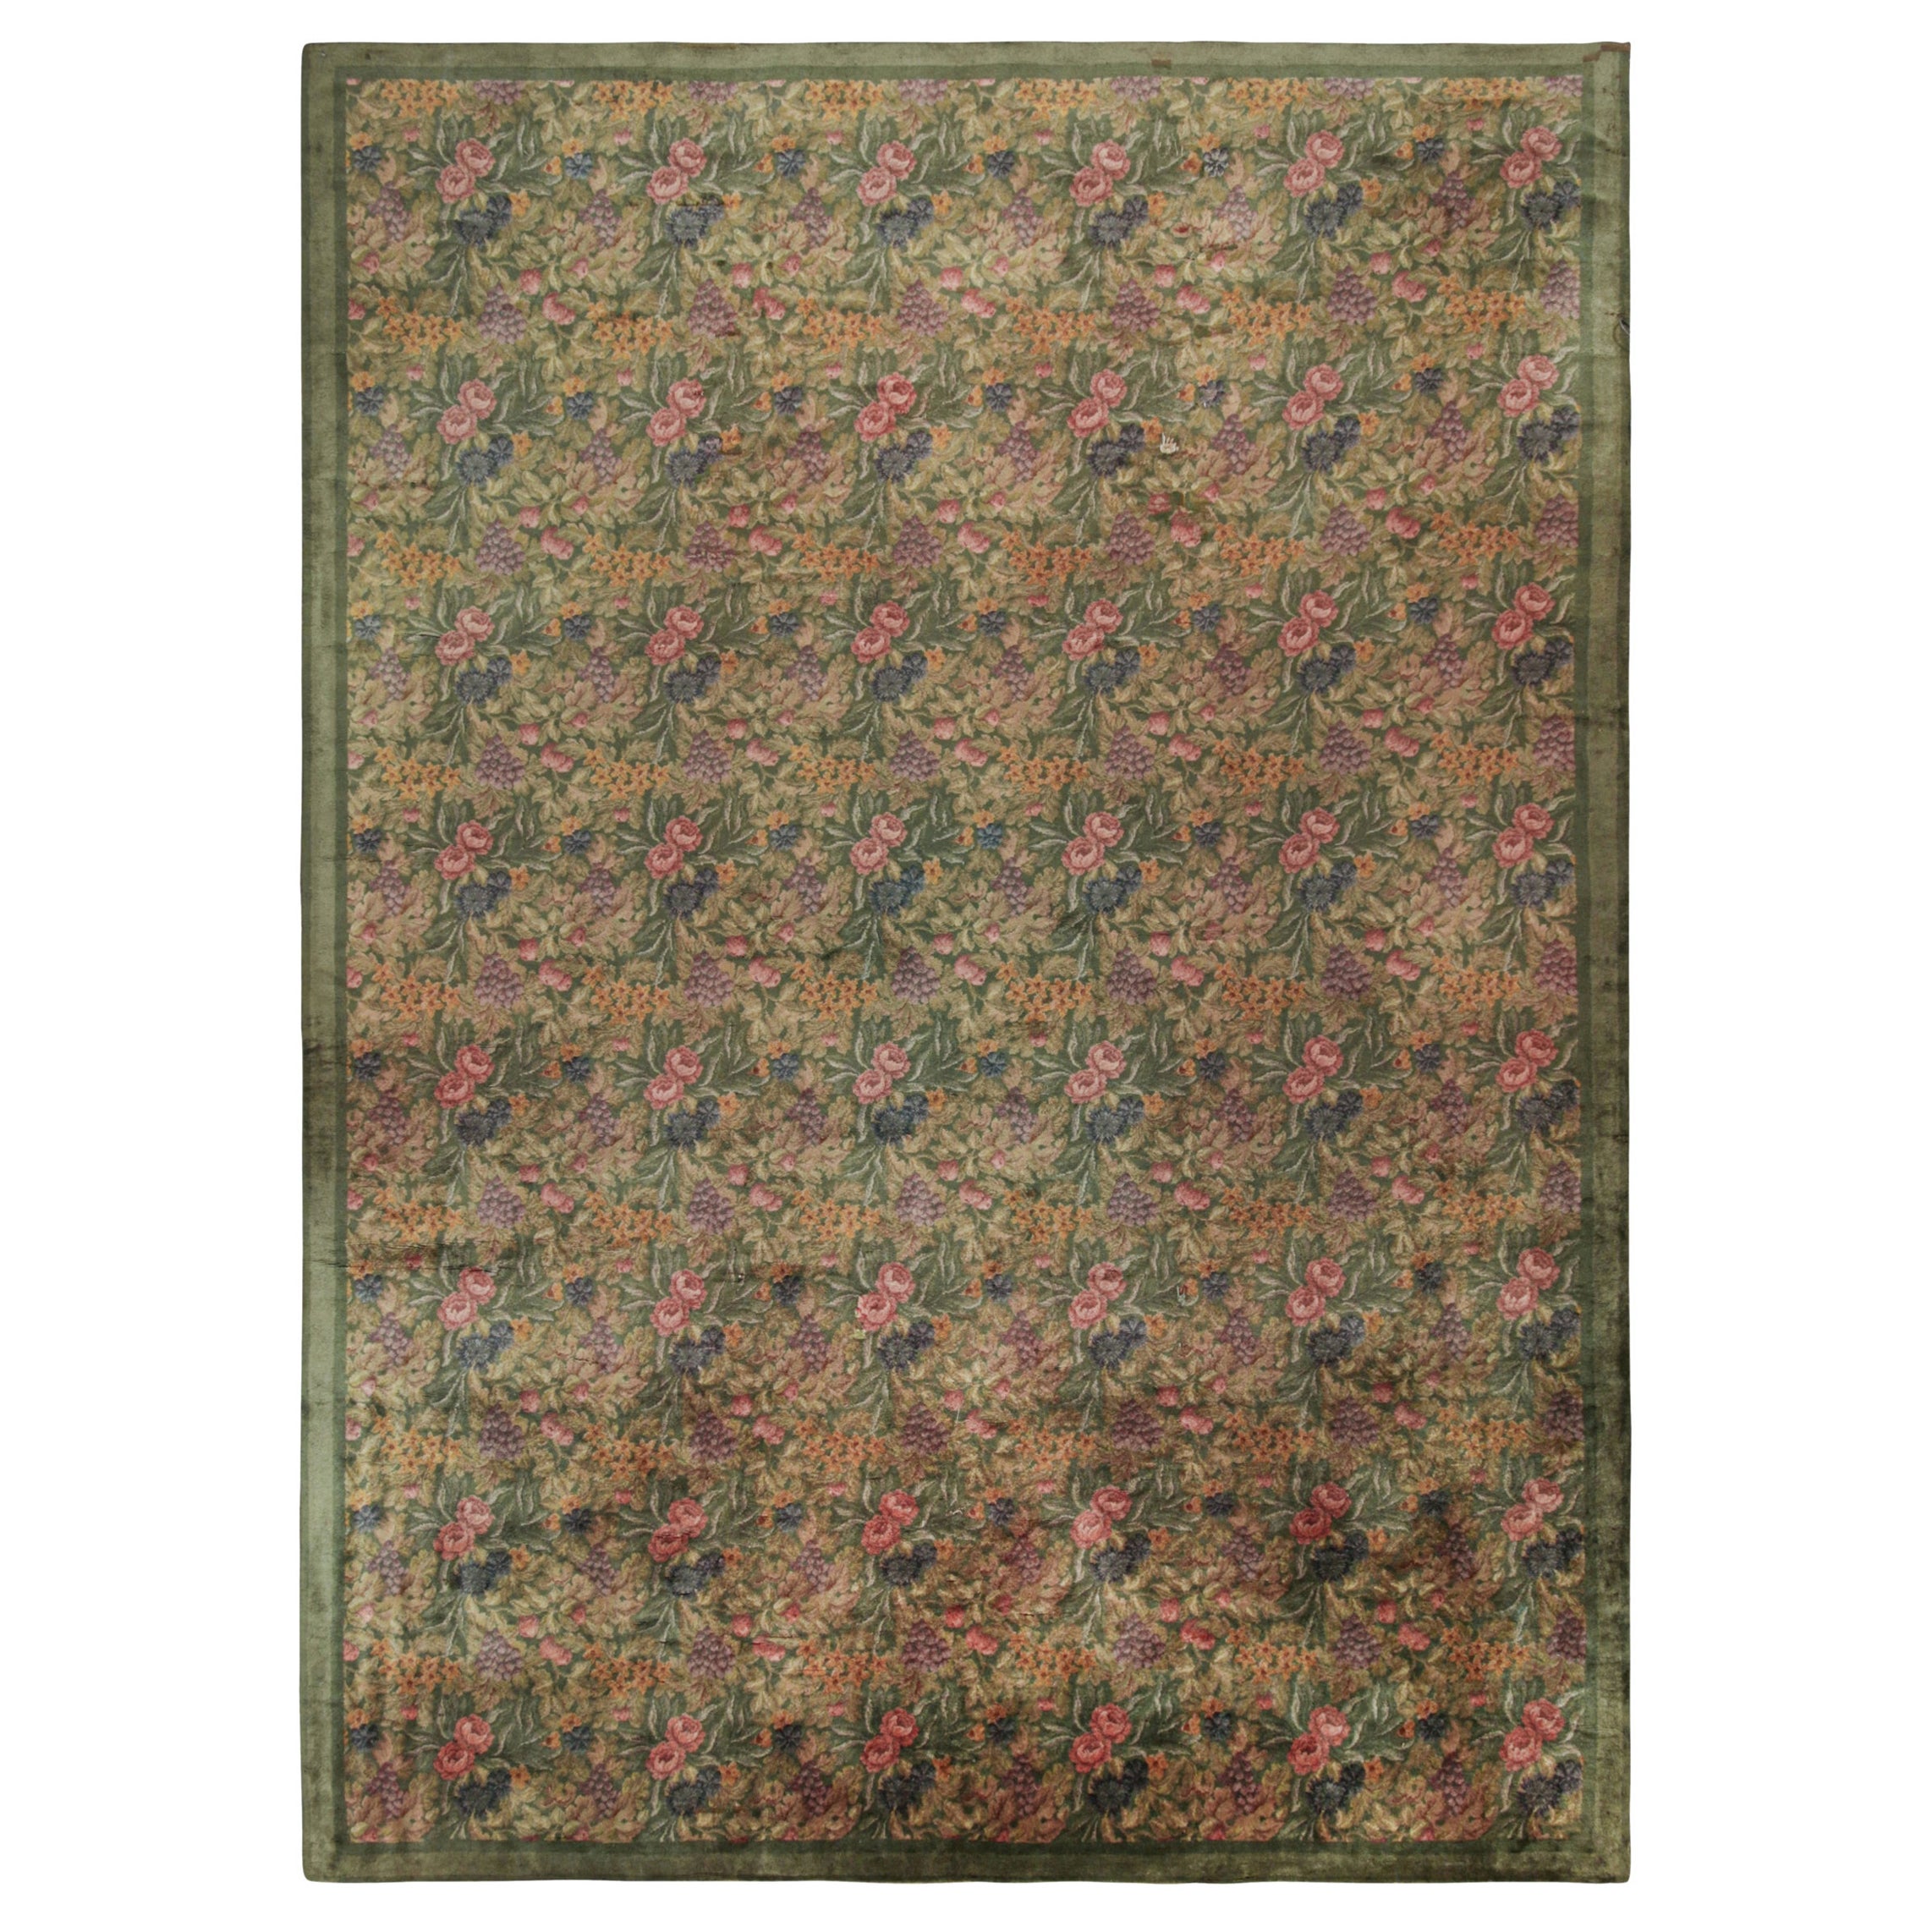 Tapis Axminster anglais ancien en vert avec motif floral rose en vente